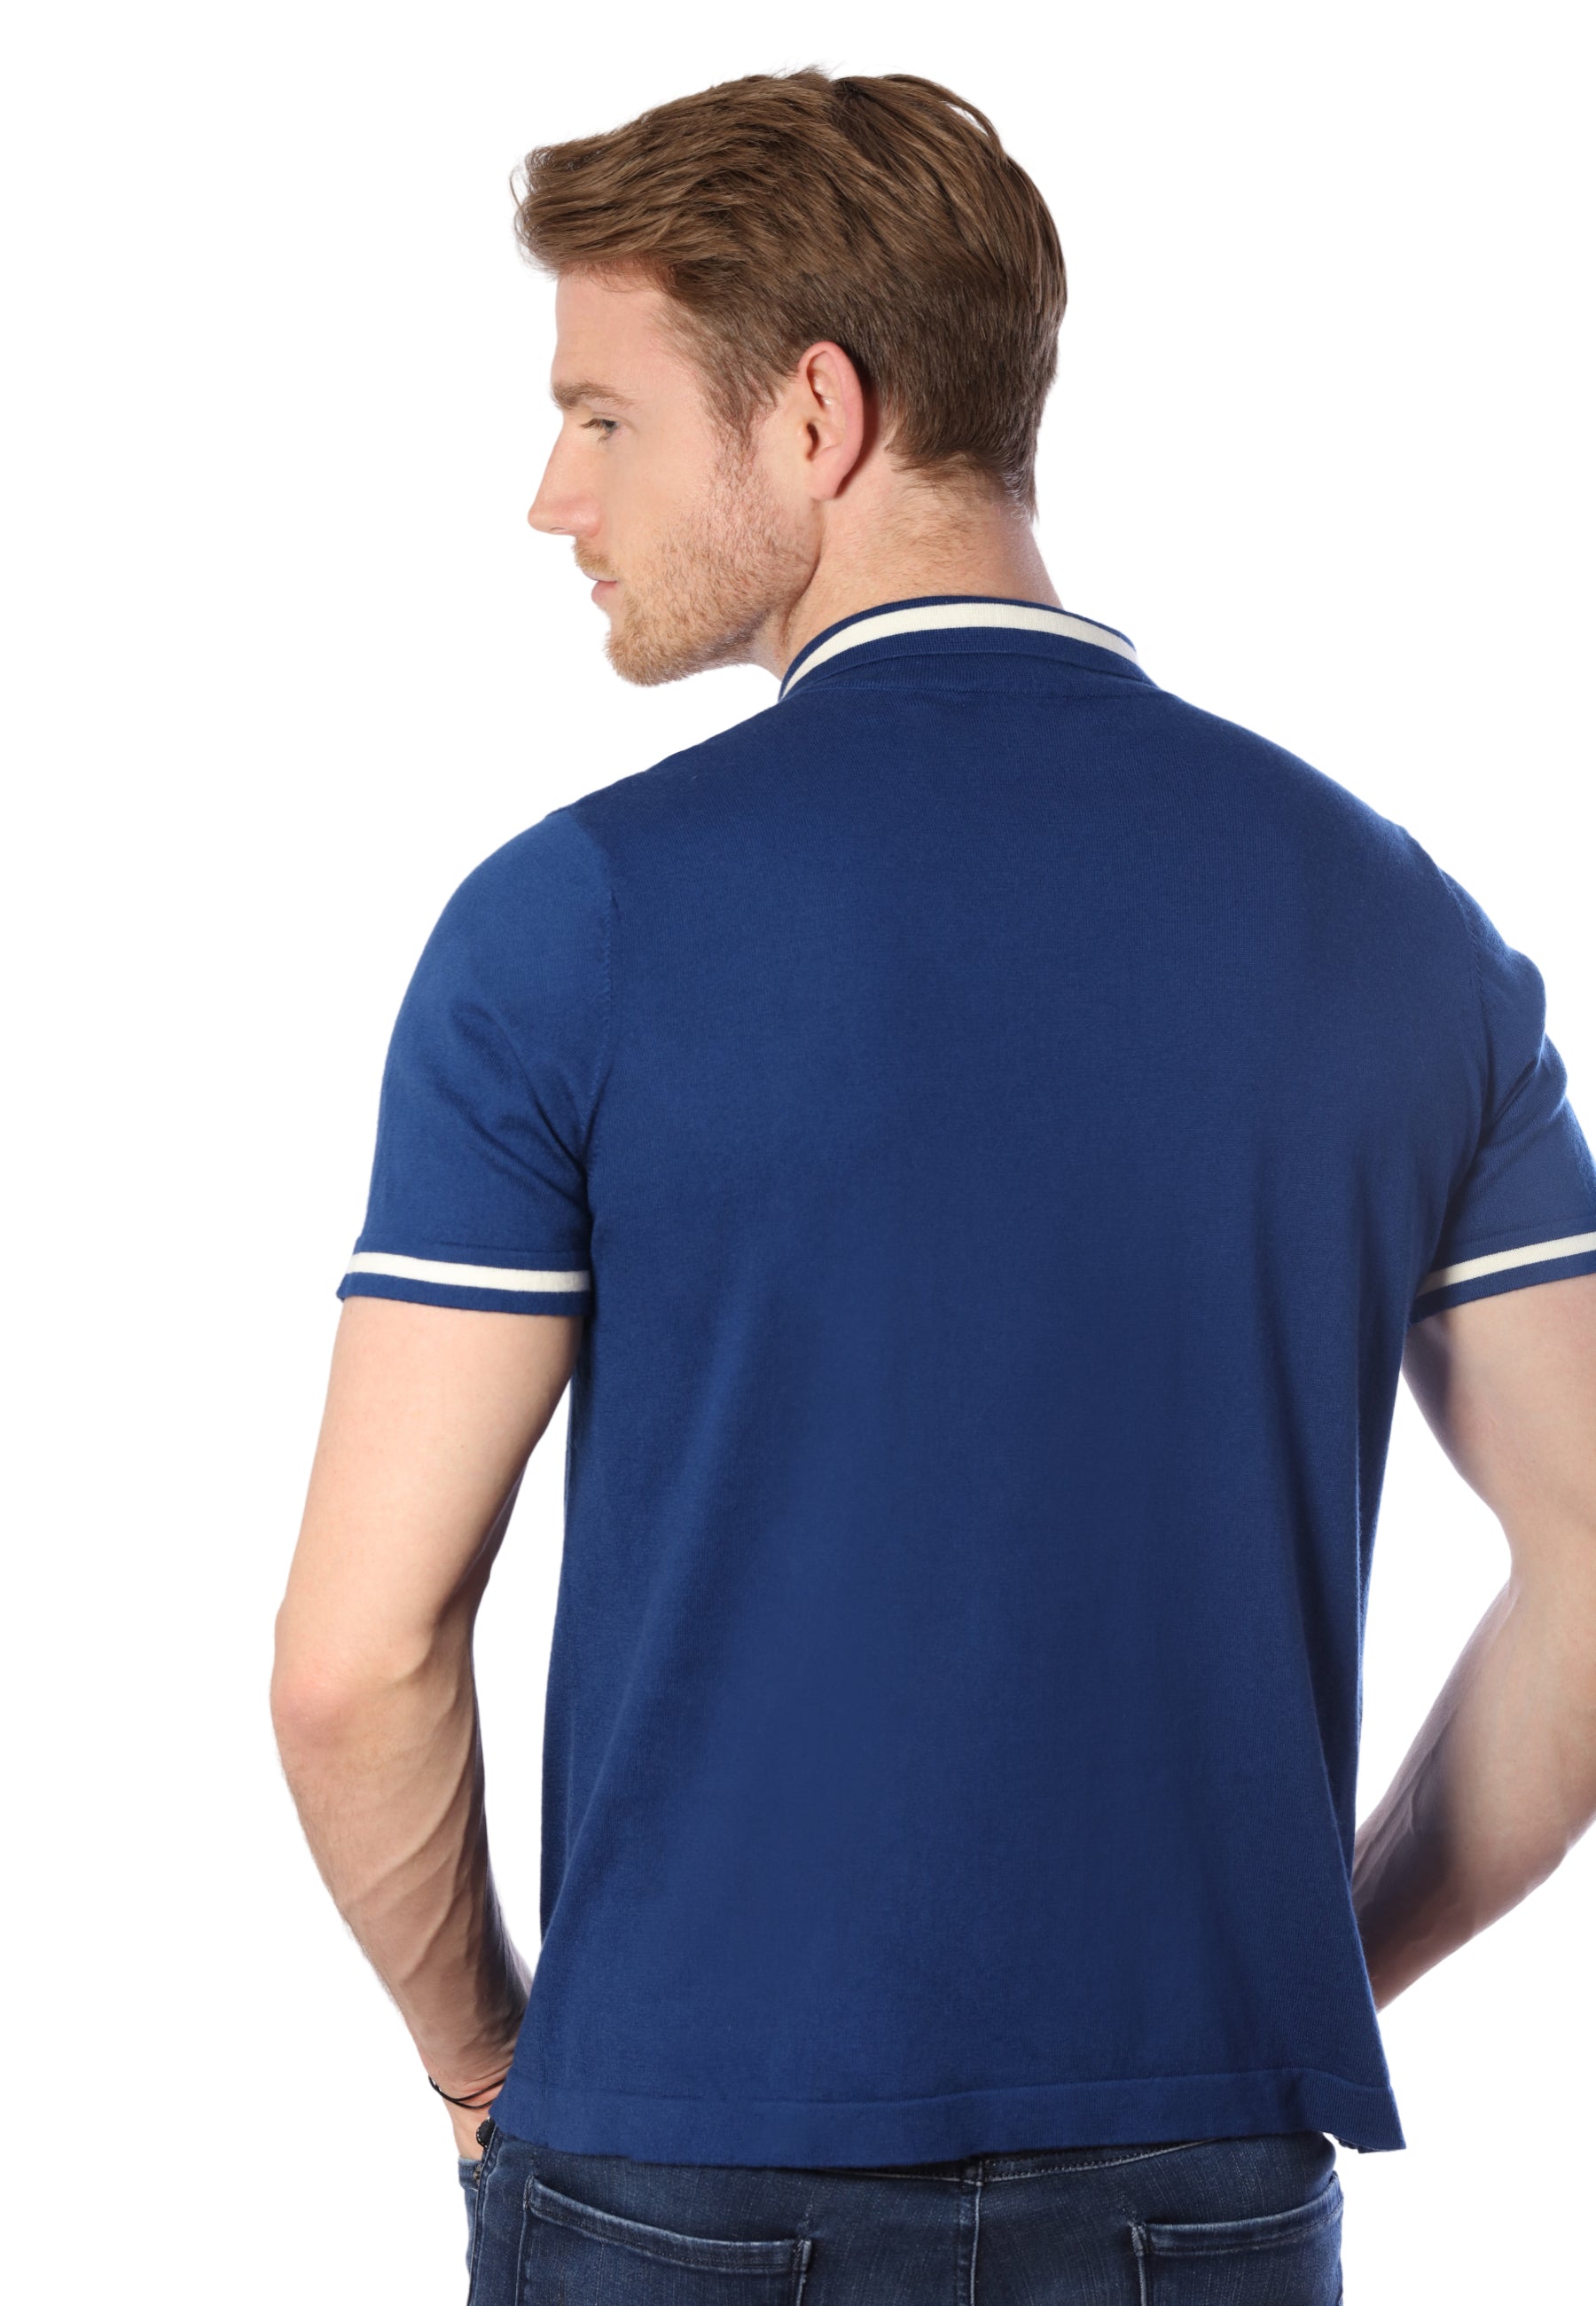 Cotton Cashmere Polo With Stripe Detailing | Blue Size S M L XL XXL | Bellemere New York 100% Sustainable Fashion | 90% Cotton 10% Cashmere | Tennis & Golf Polo Shirt